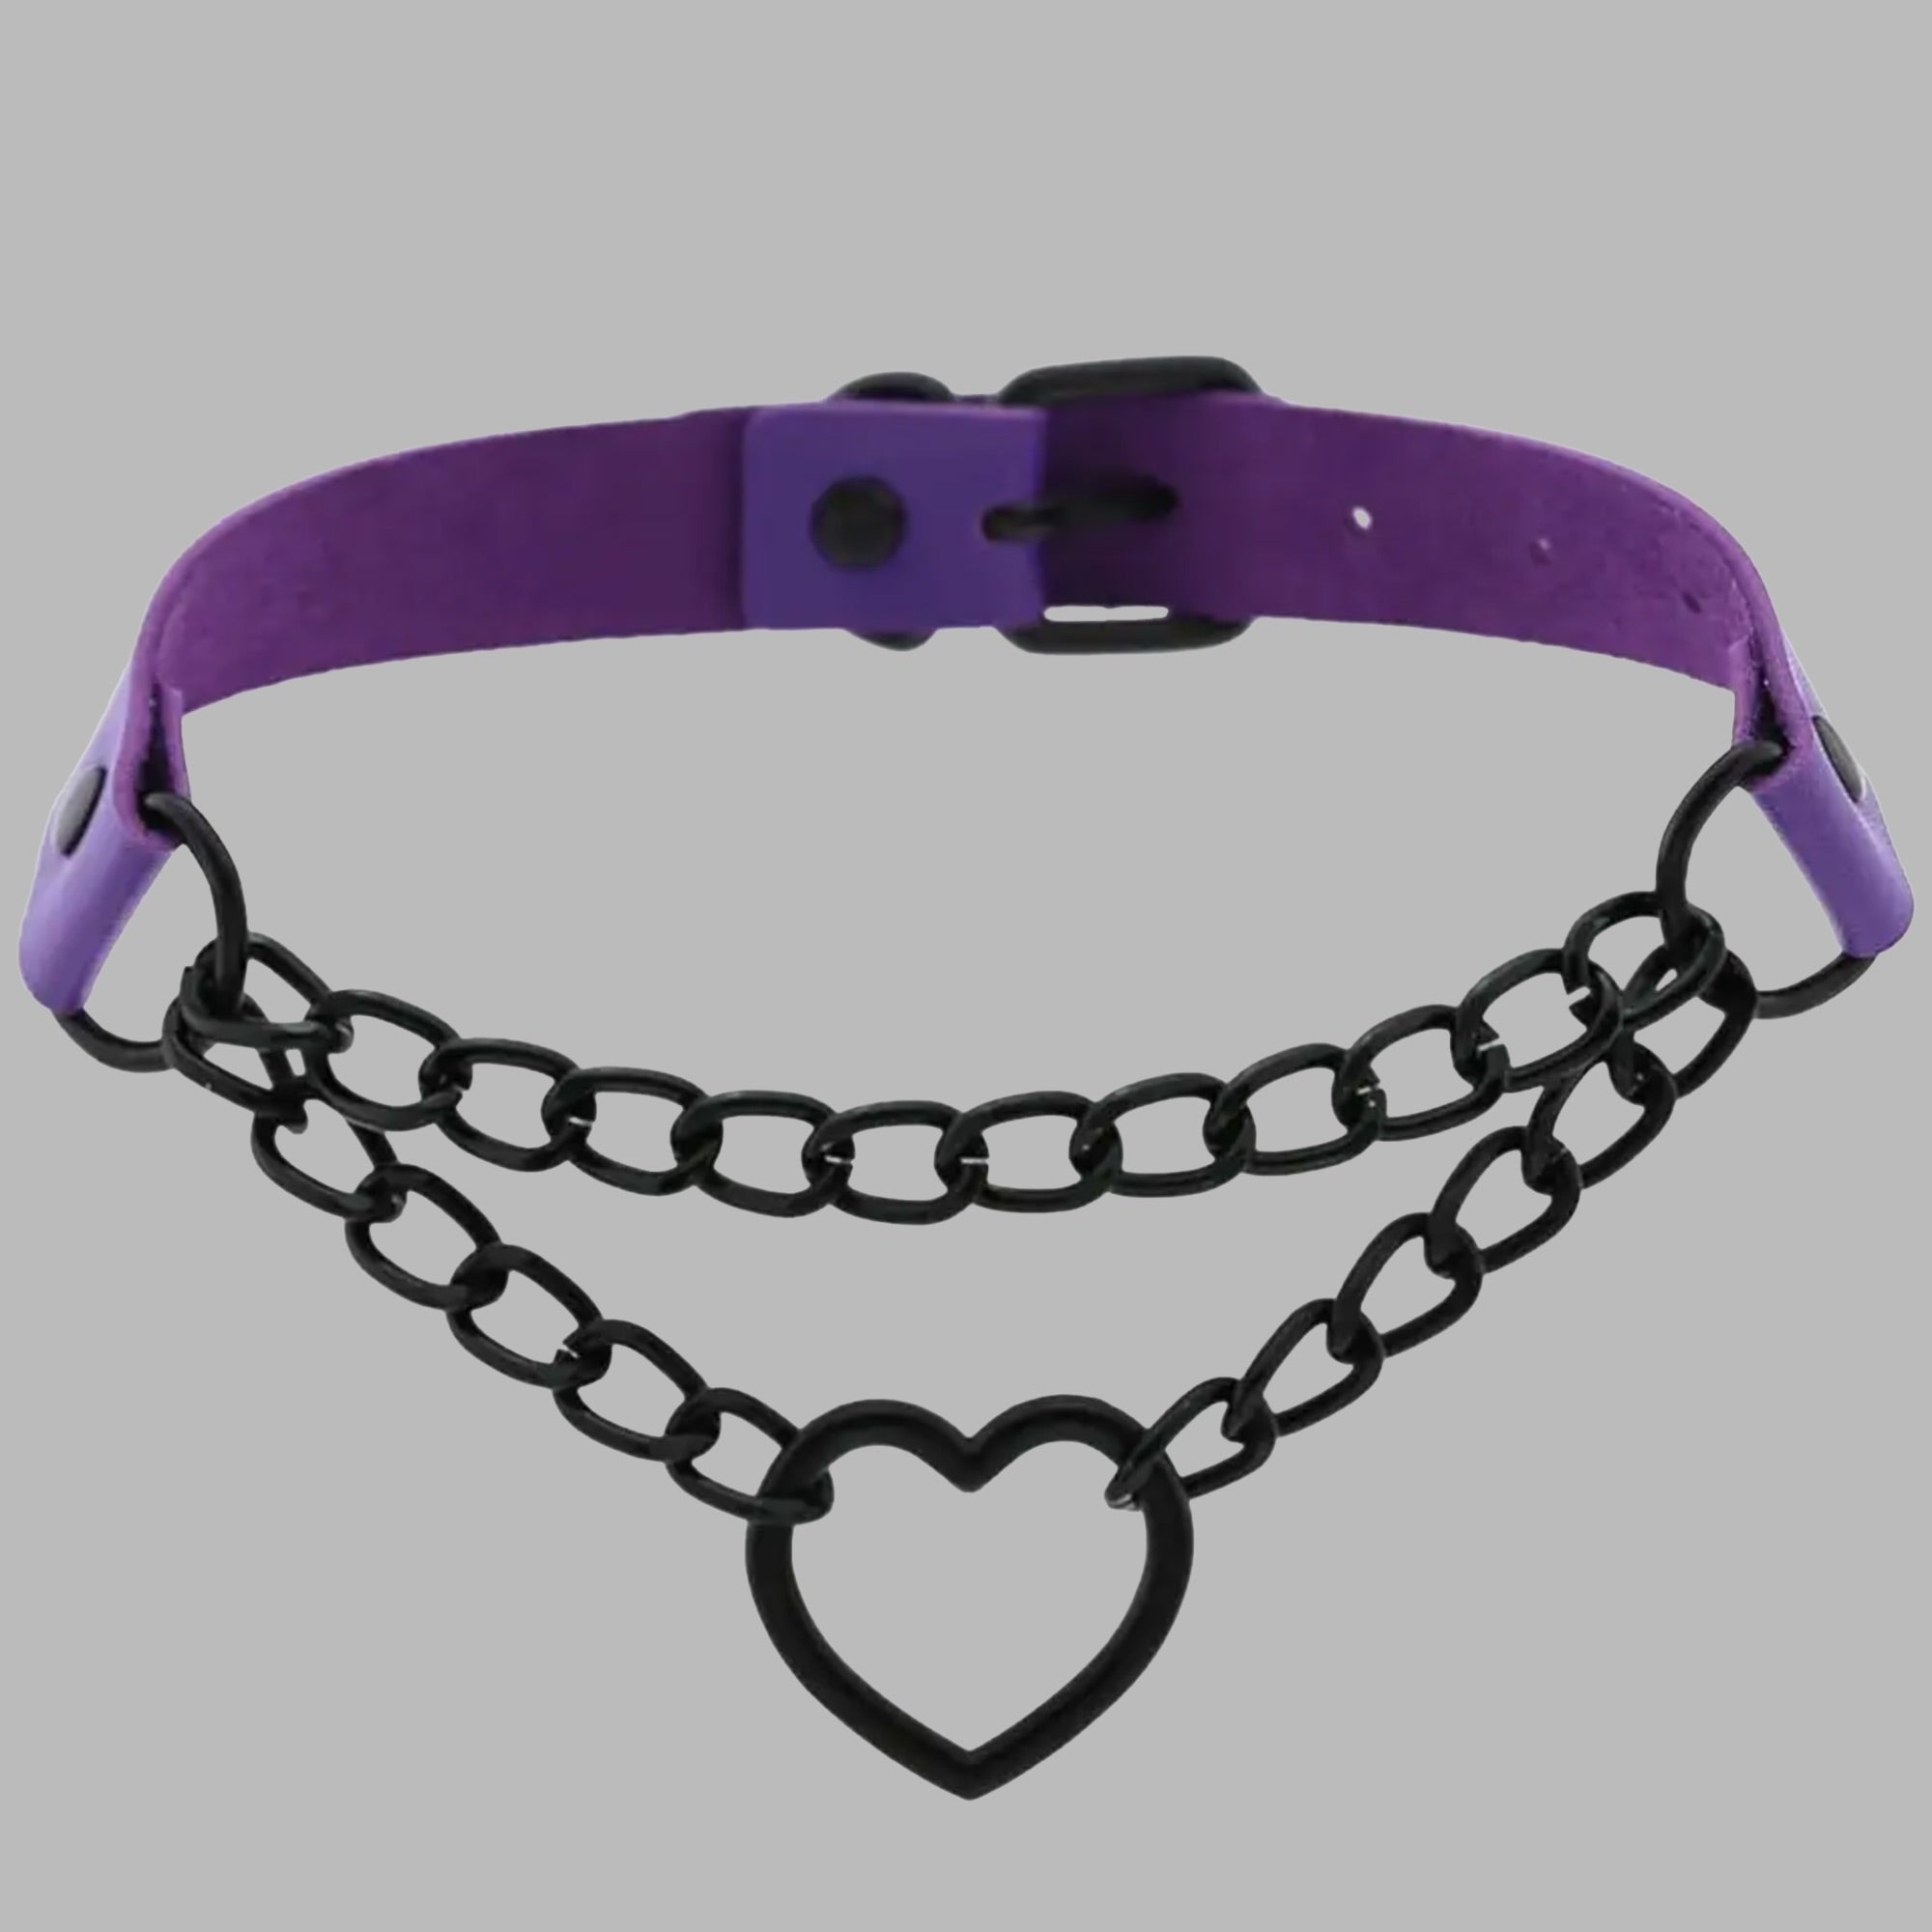 Chained Heart Choker - Purple & Black